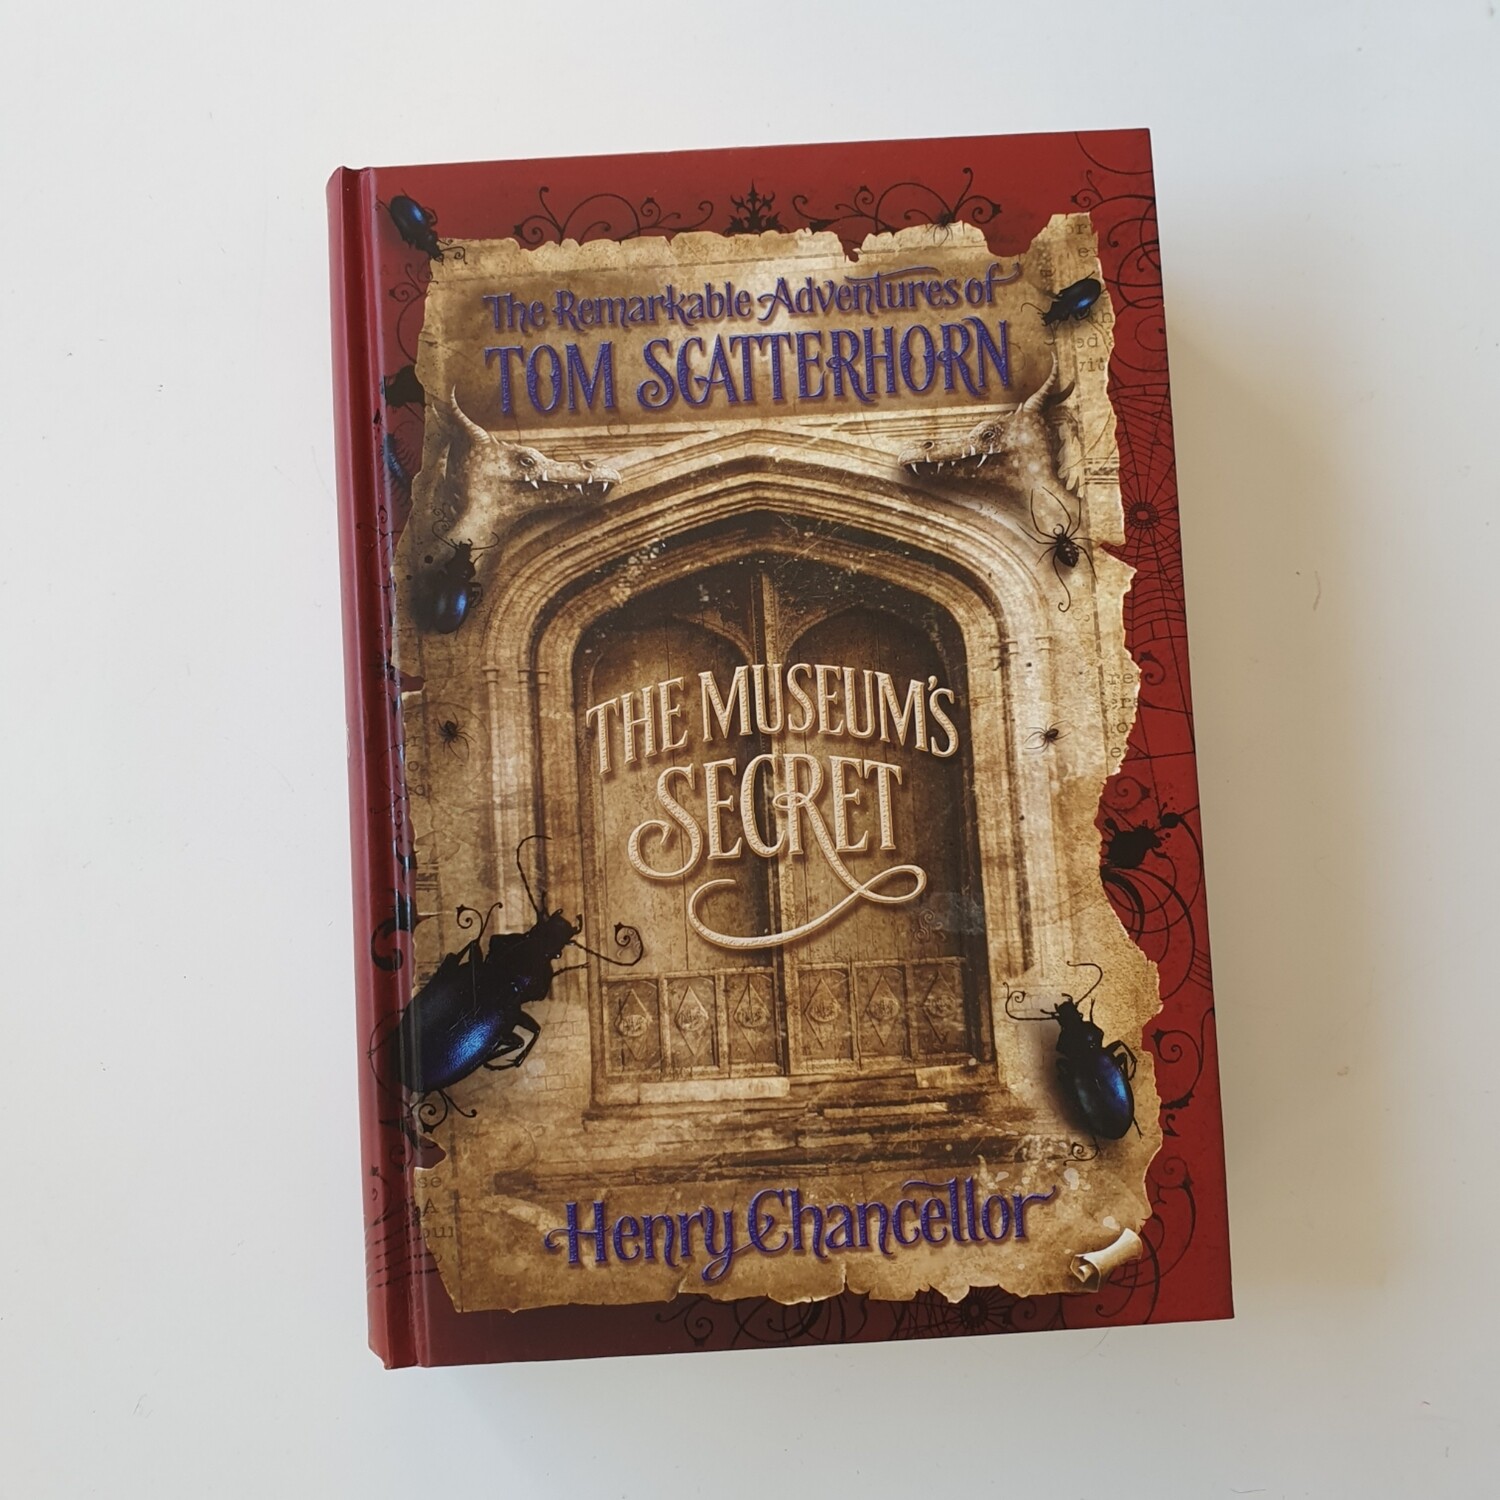 The Museum's Secret - The Adventures of Tom Scatterhorn Notebook